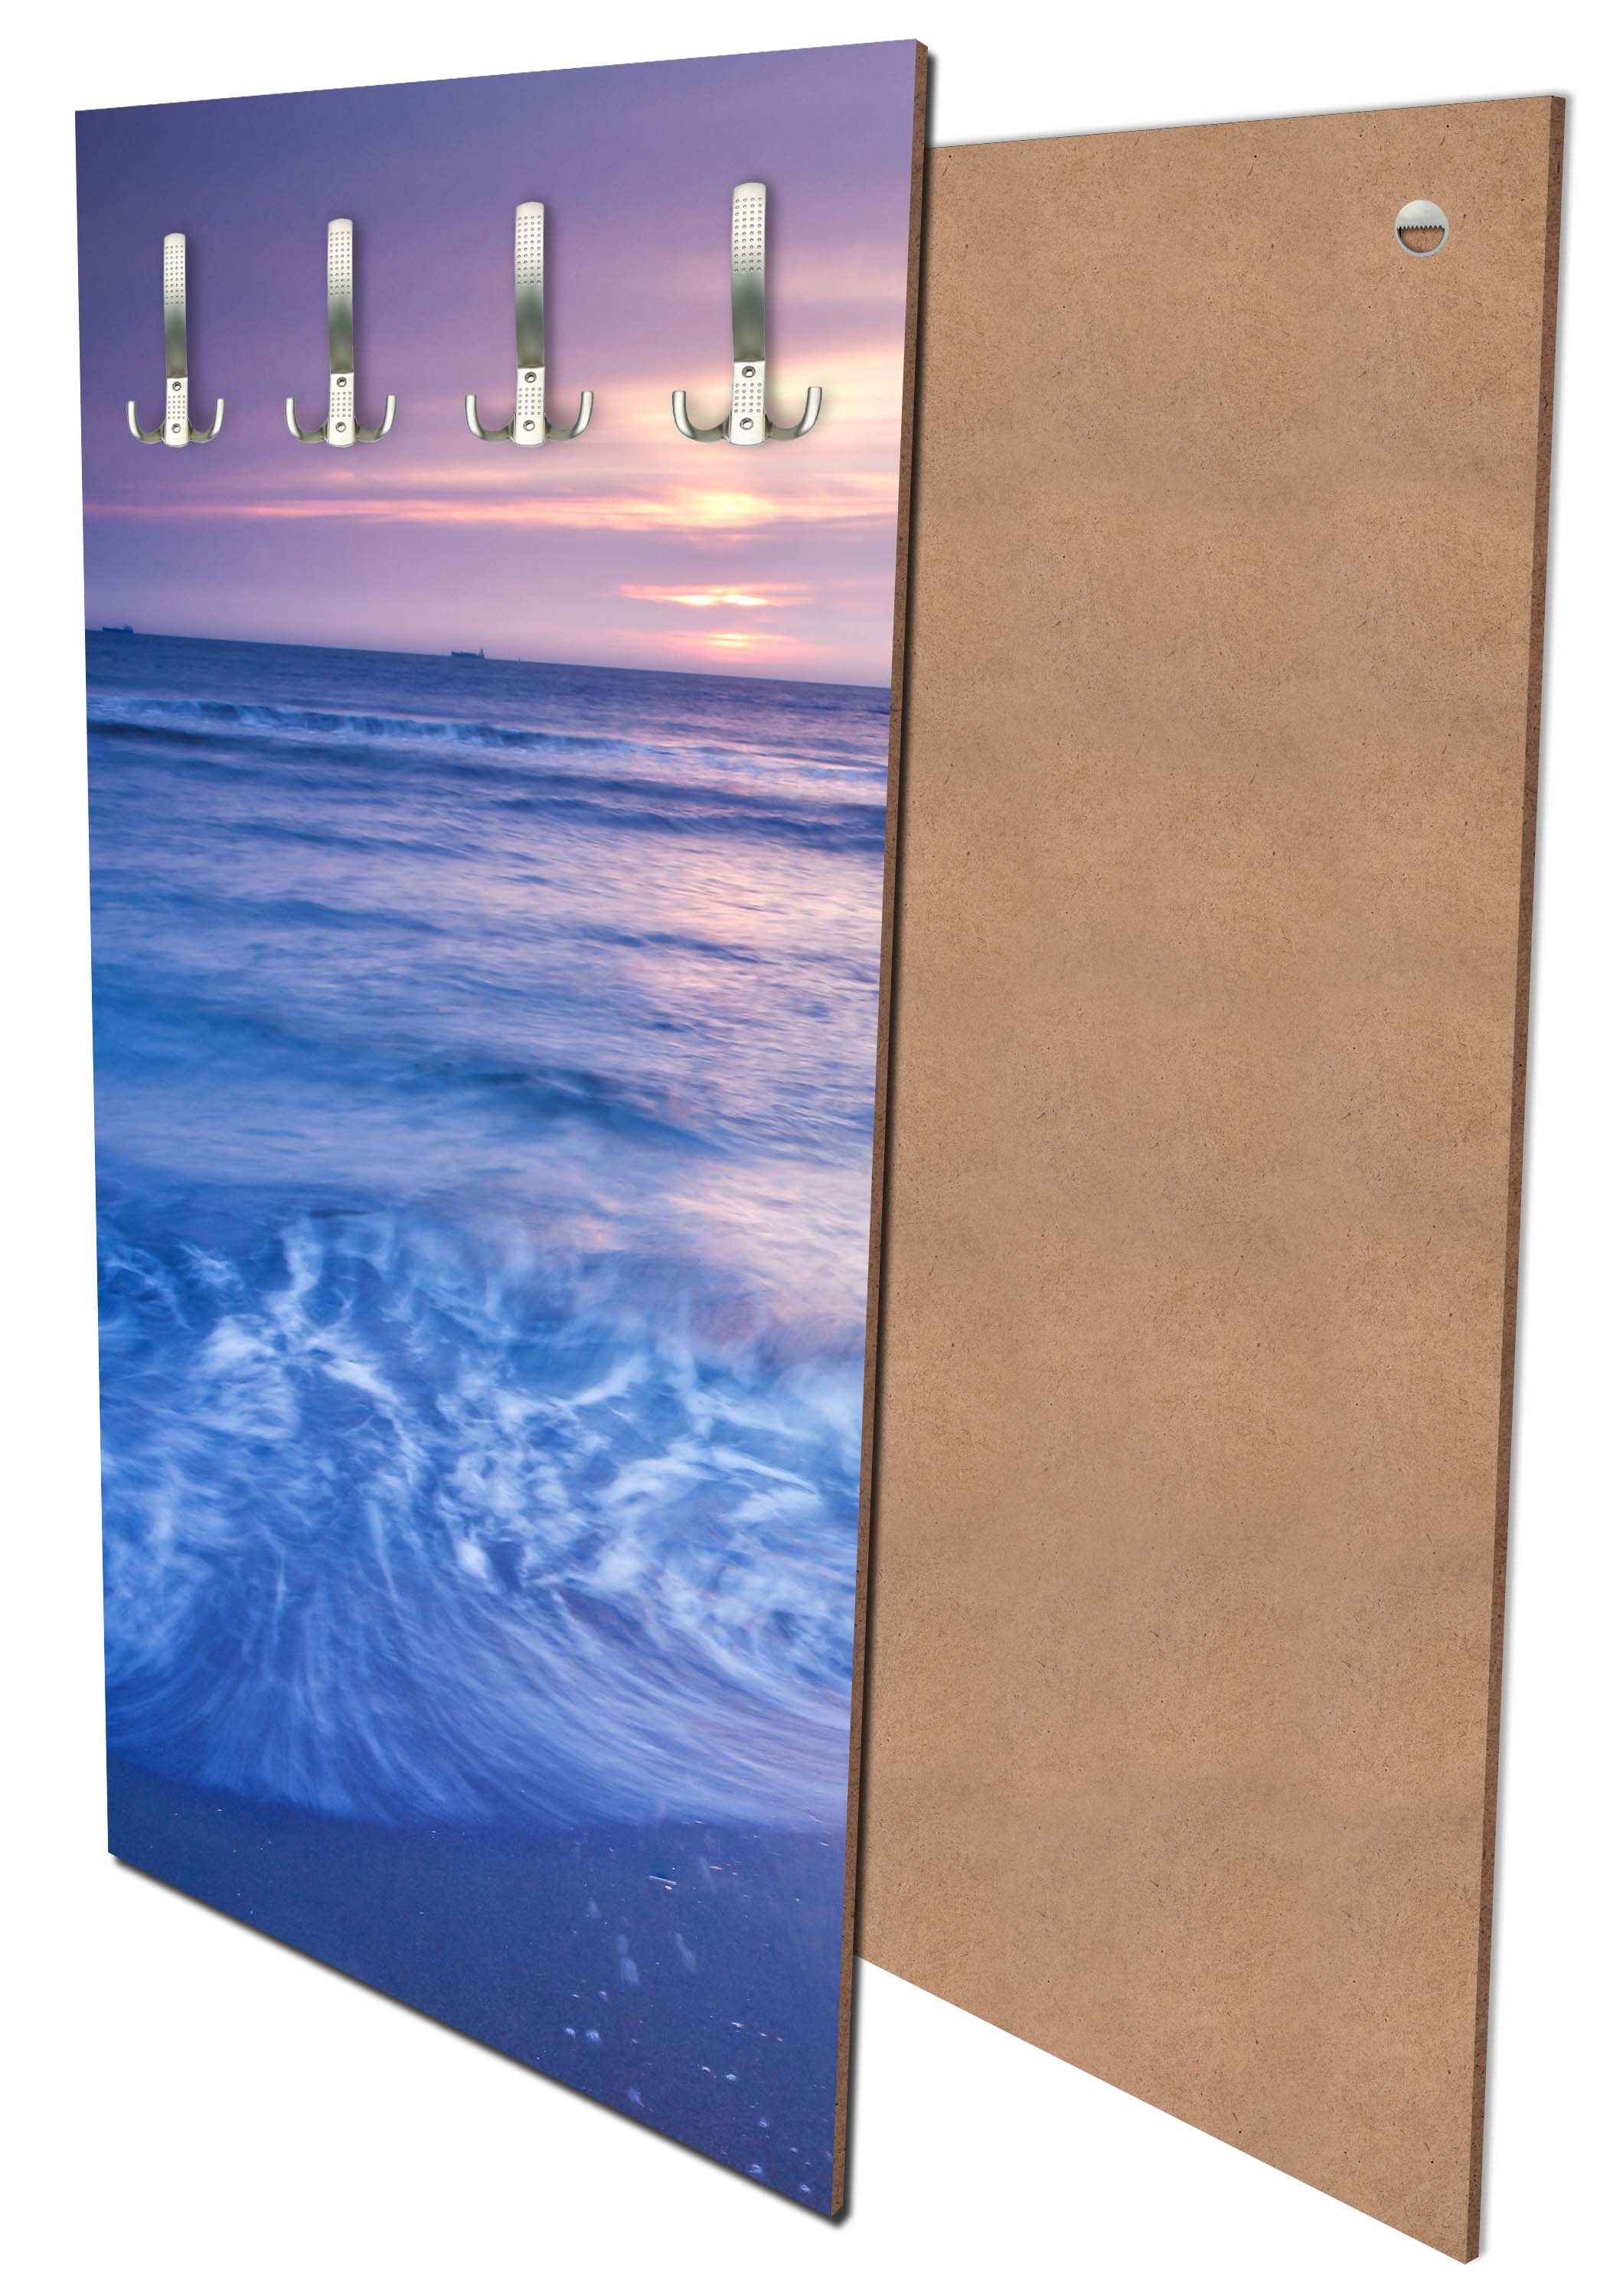 Garderobe Strand Wellen bei Sonnenuntergang M0895 entdecken - Bild 1